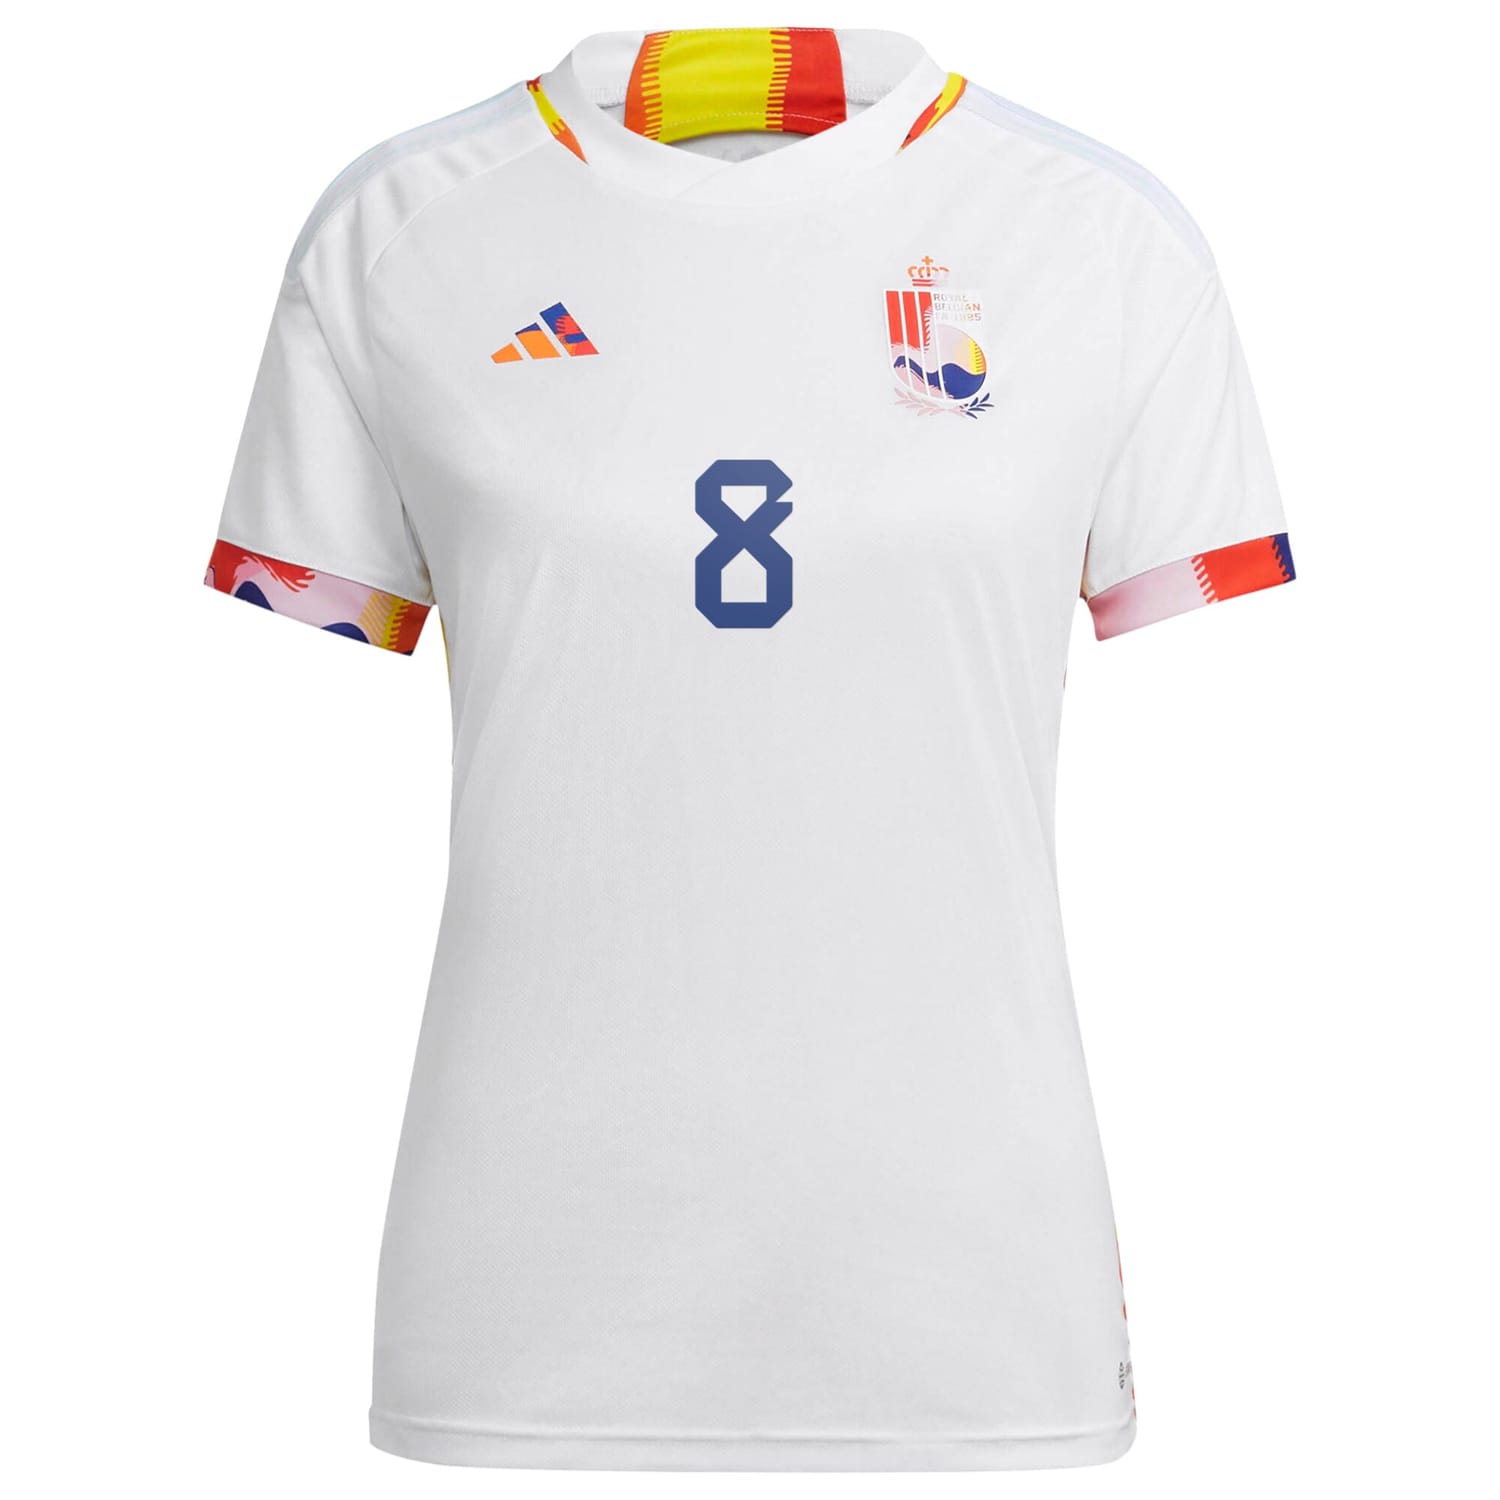 Belgium National Team Away Jersey Shirt 2022 player Youri Tielemans 8 printing for Women